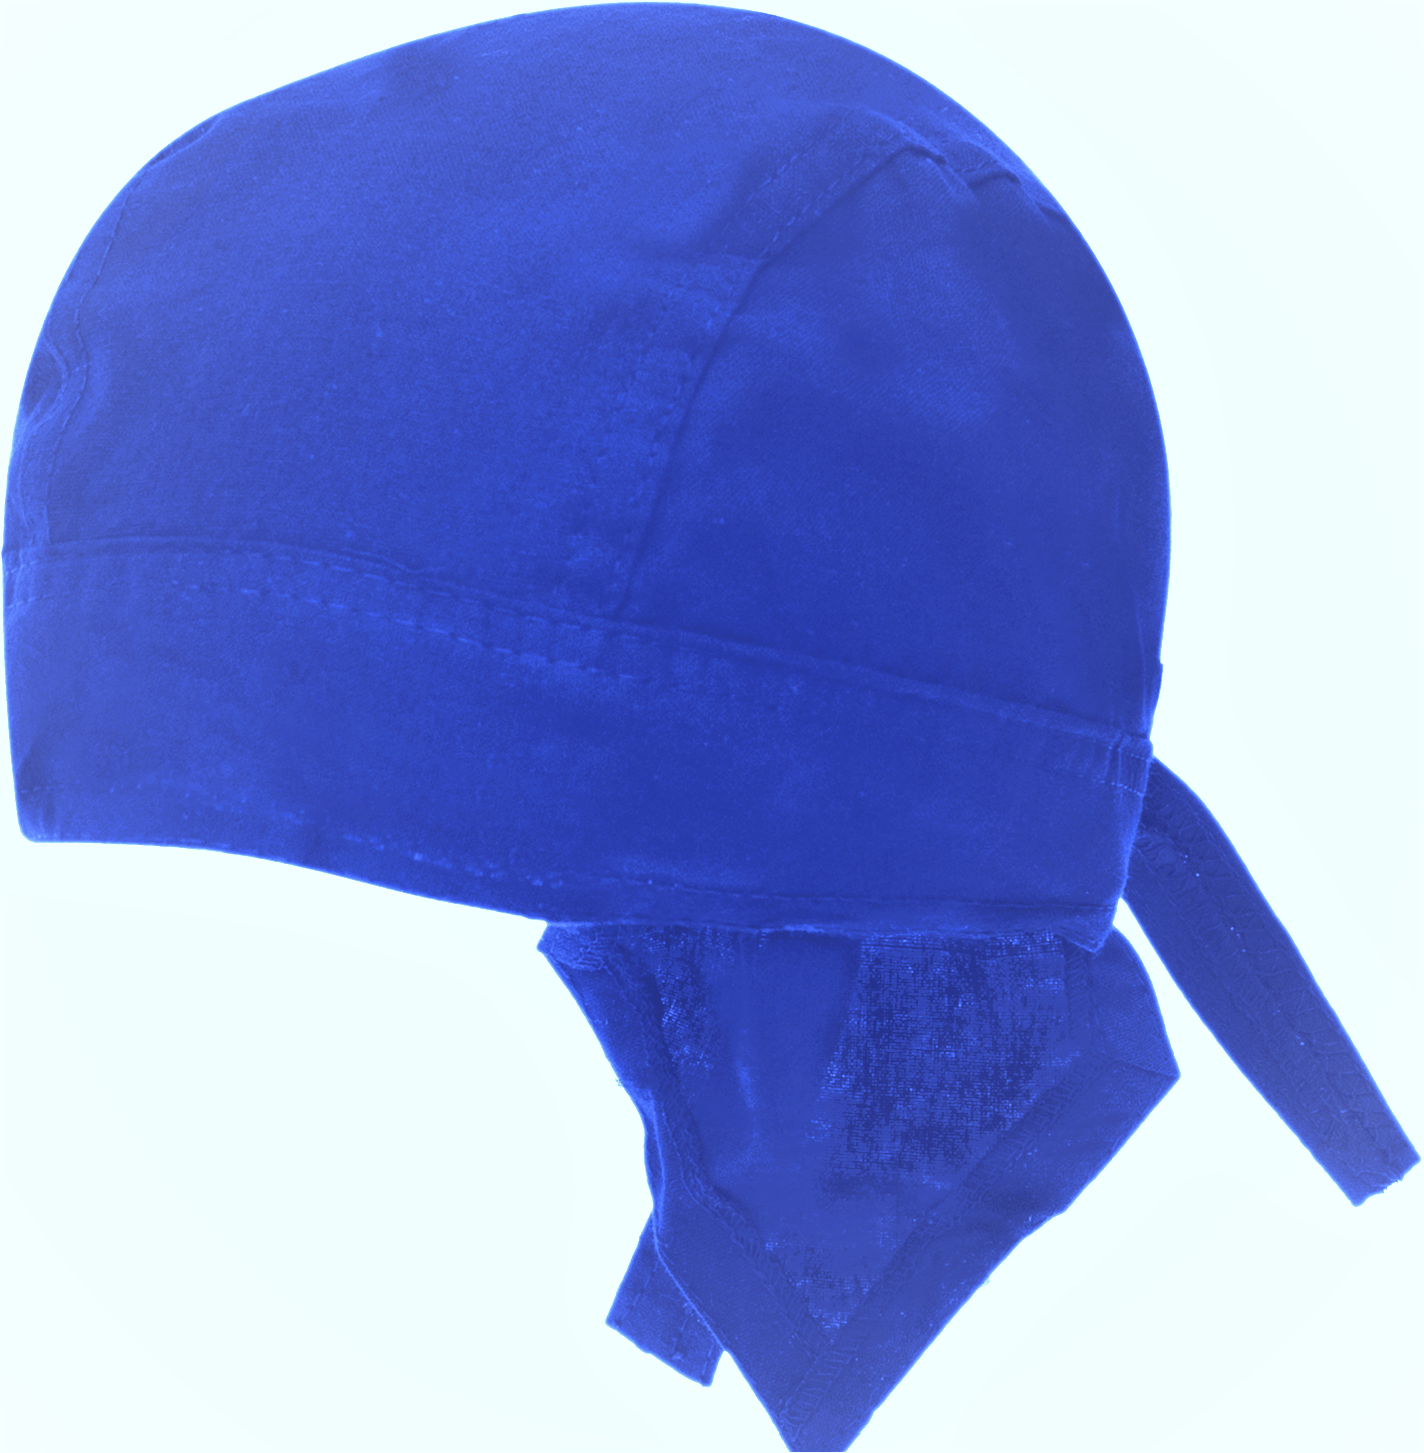 Blue Solid Color Head Wrap - 100% Cotton - Imported - Mirage Blue, 1 piece